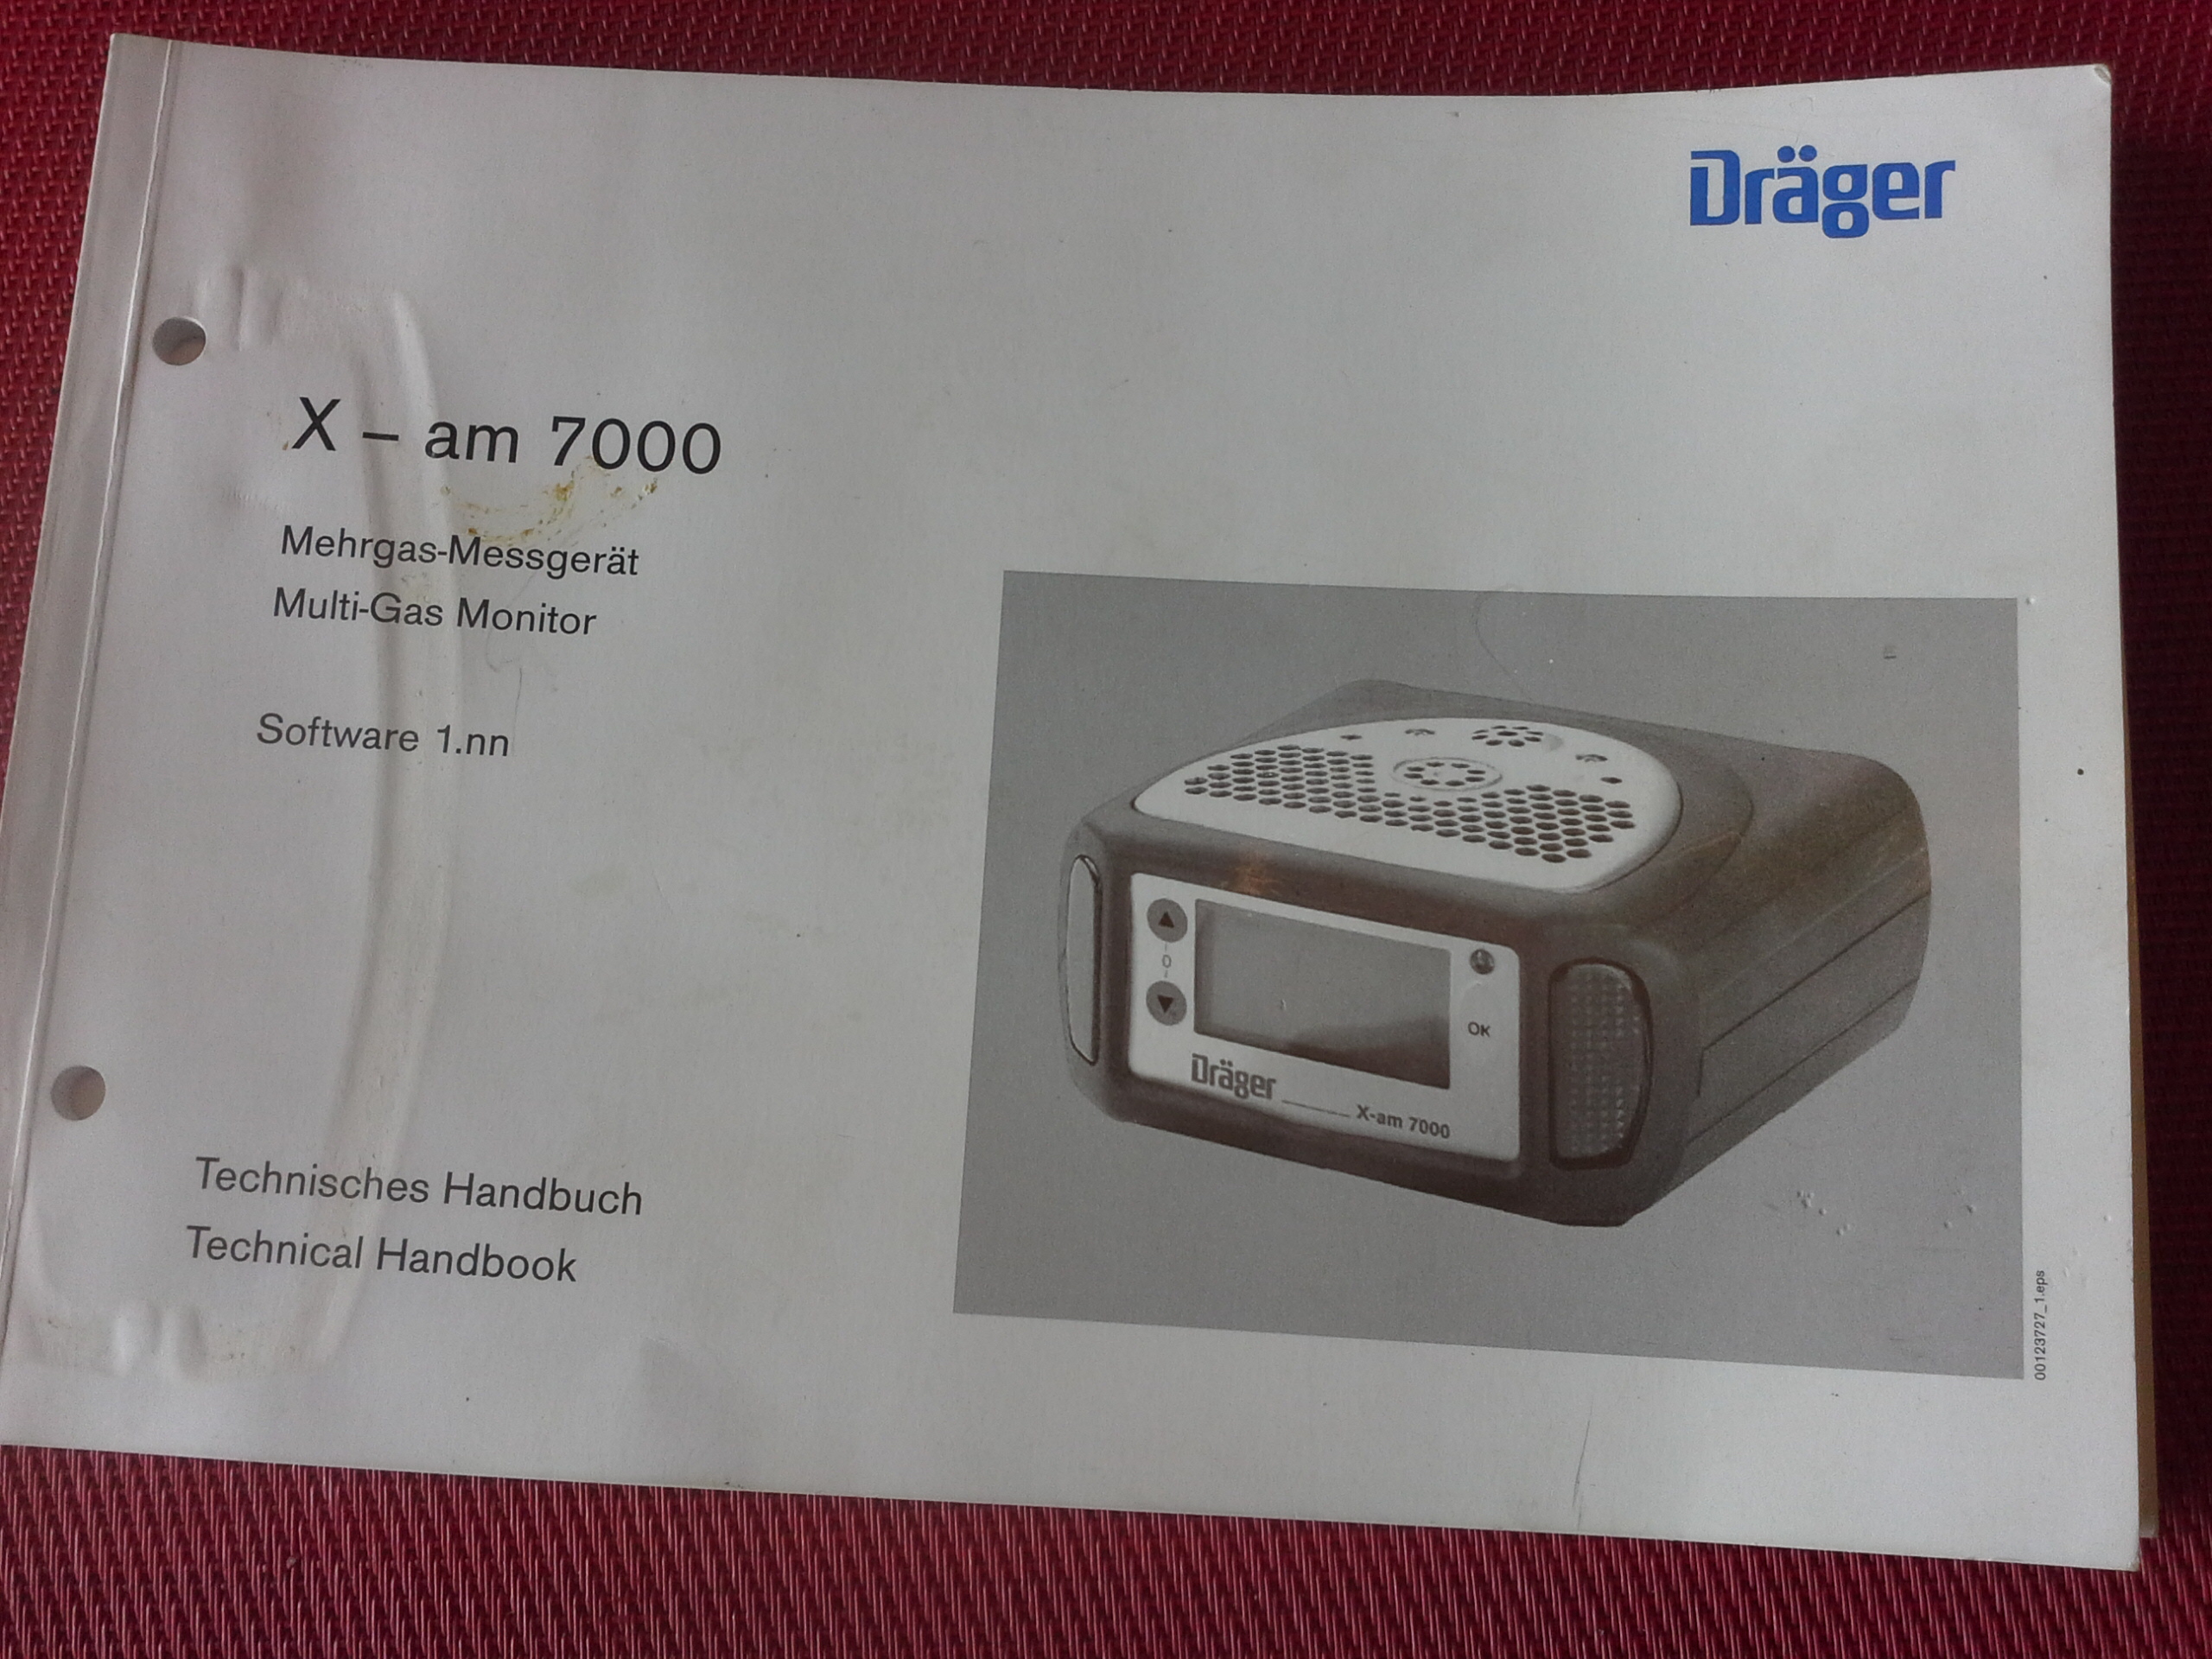  Mehrgasmessgerät Dräger X-AM 7000